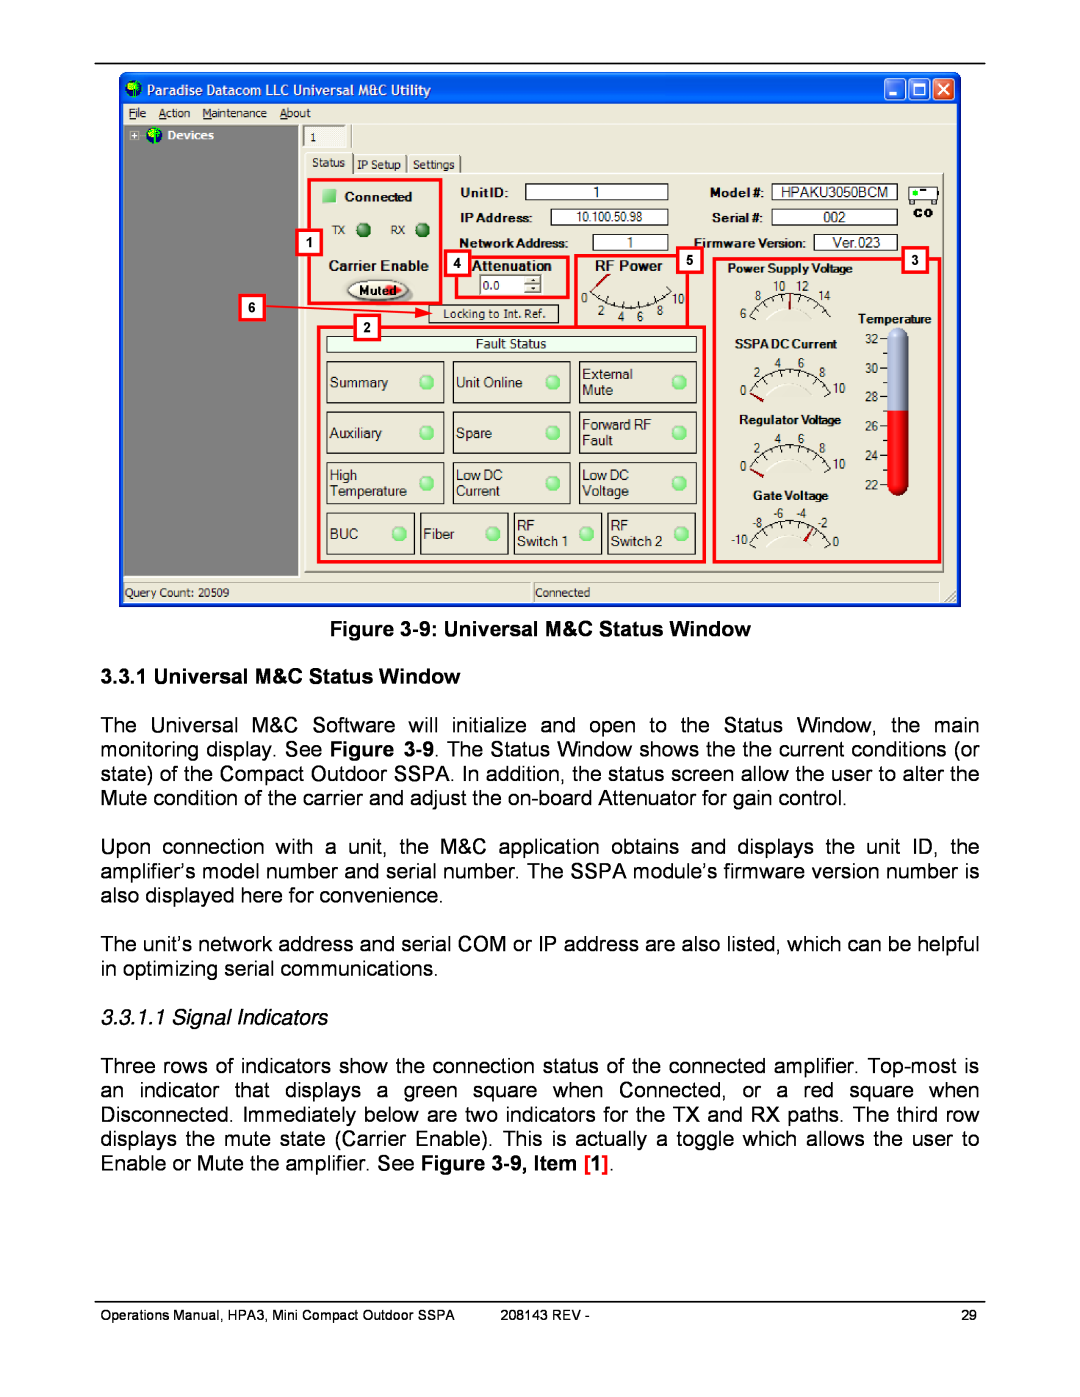 Paradise RA 5785 manual 9 Universal M&C Status Window, Signal Indicators 